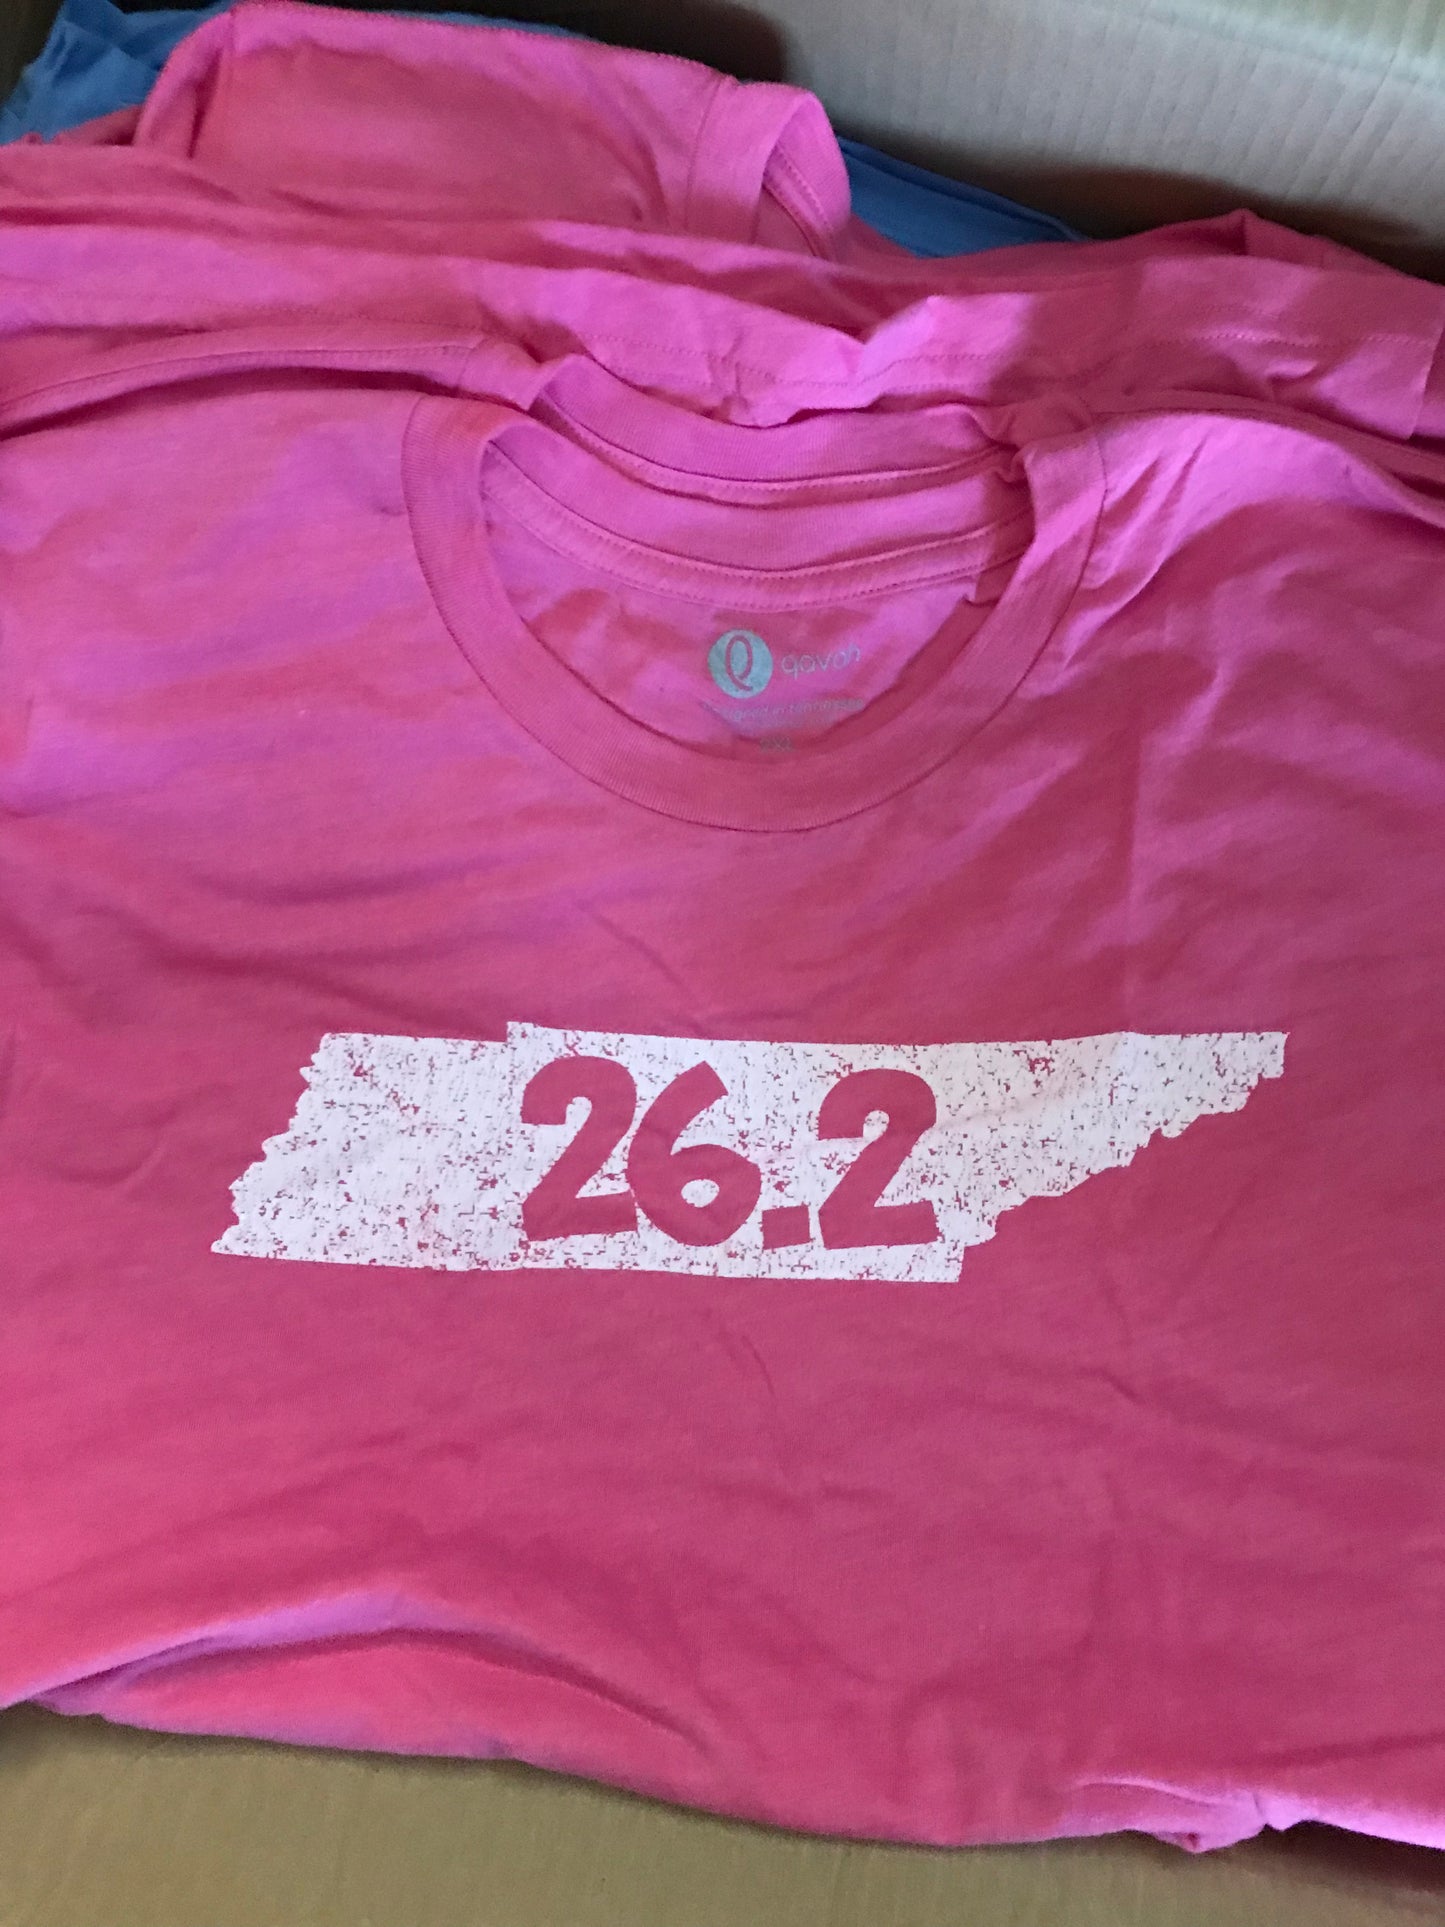 Tennessee Marathon 26.2 Distressed Print Shirt